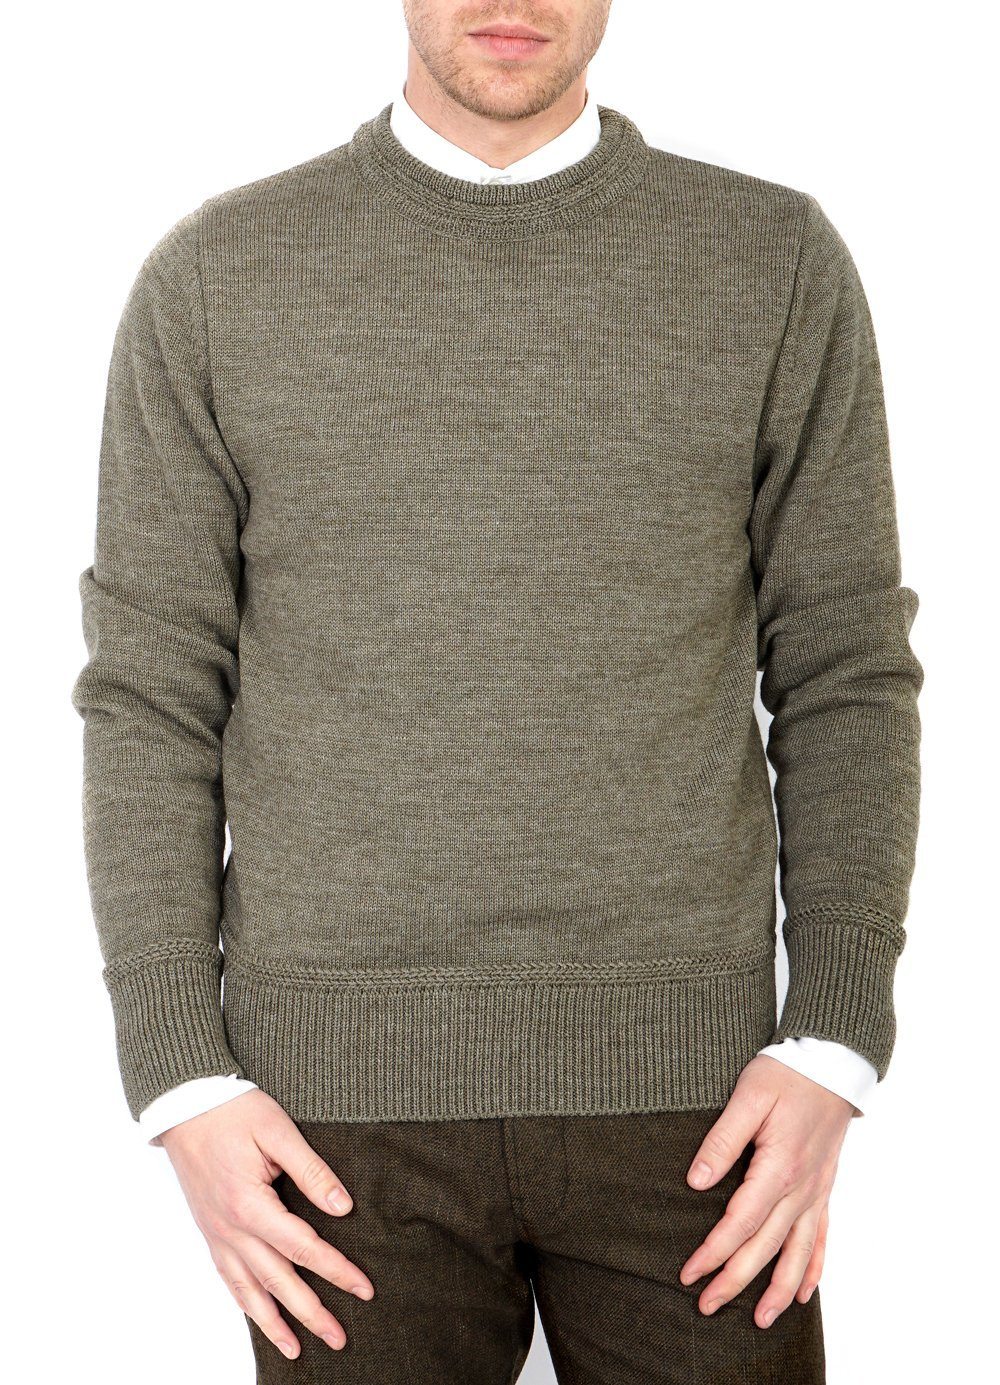 RAGNAR | Knitted Wool Sweater | Hunter | €270 -HANSEN Garments- HANSEN Garments